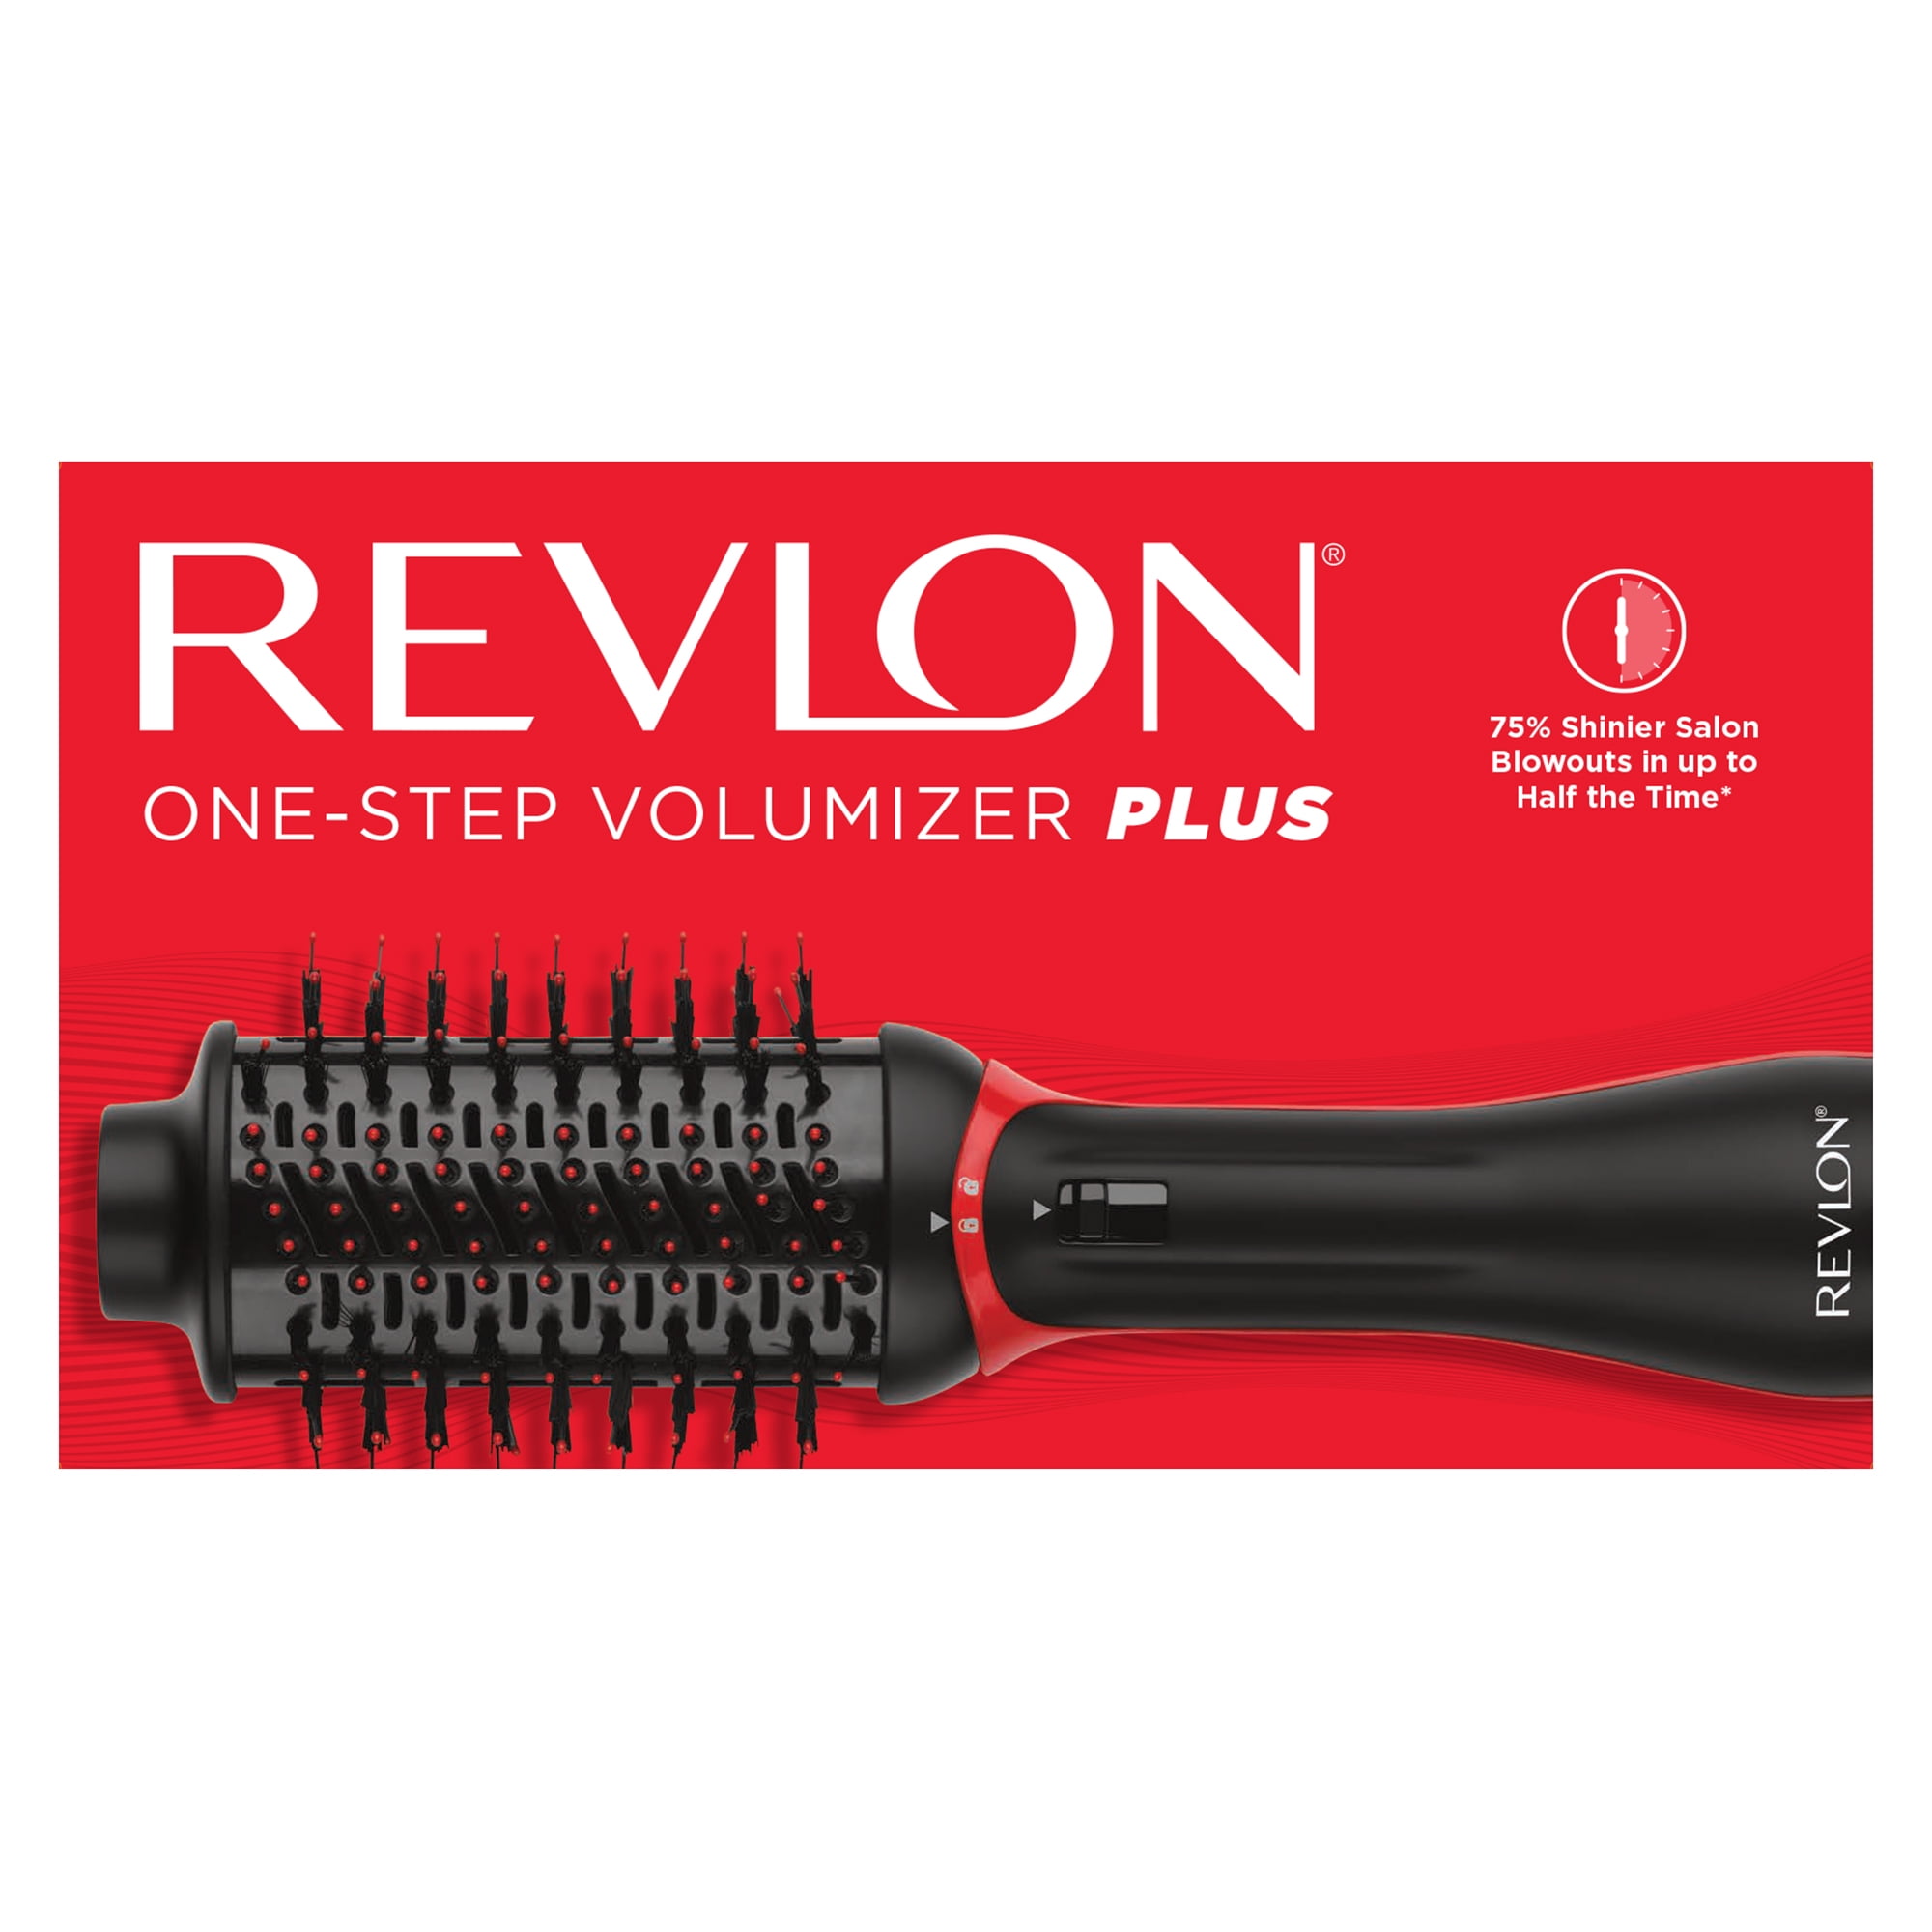 Revlon Black Friday: Sale on One-Step Hairdryer for 2019